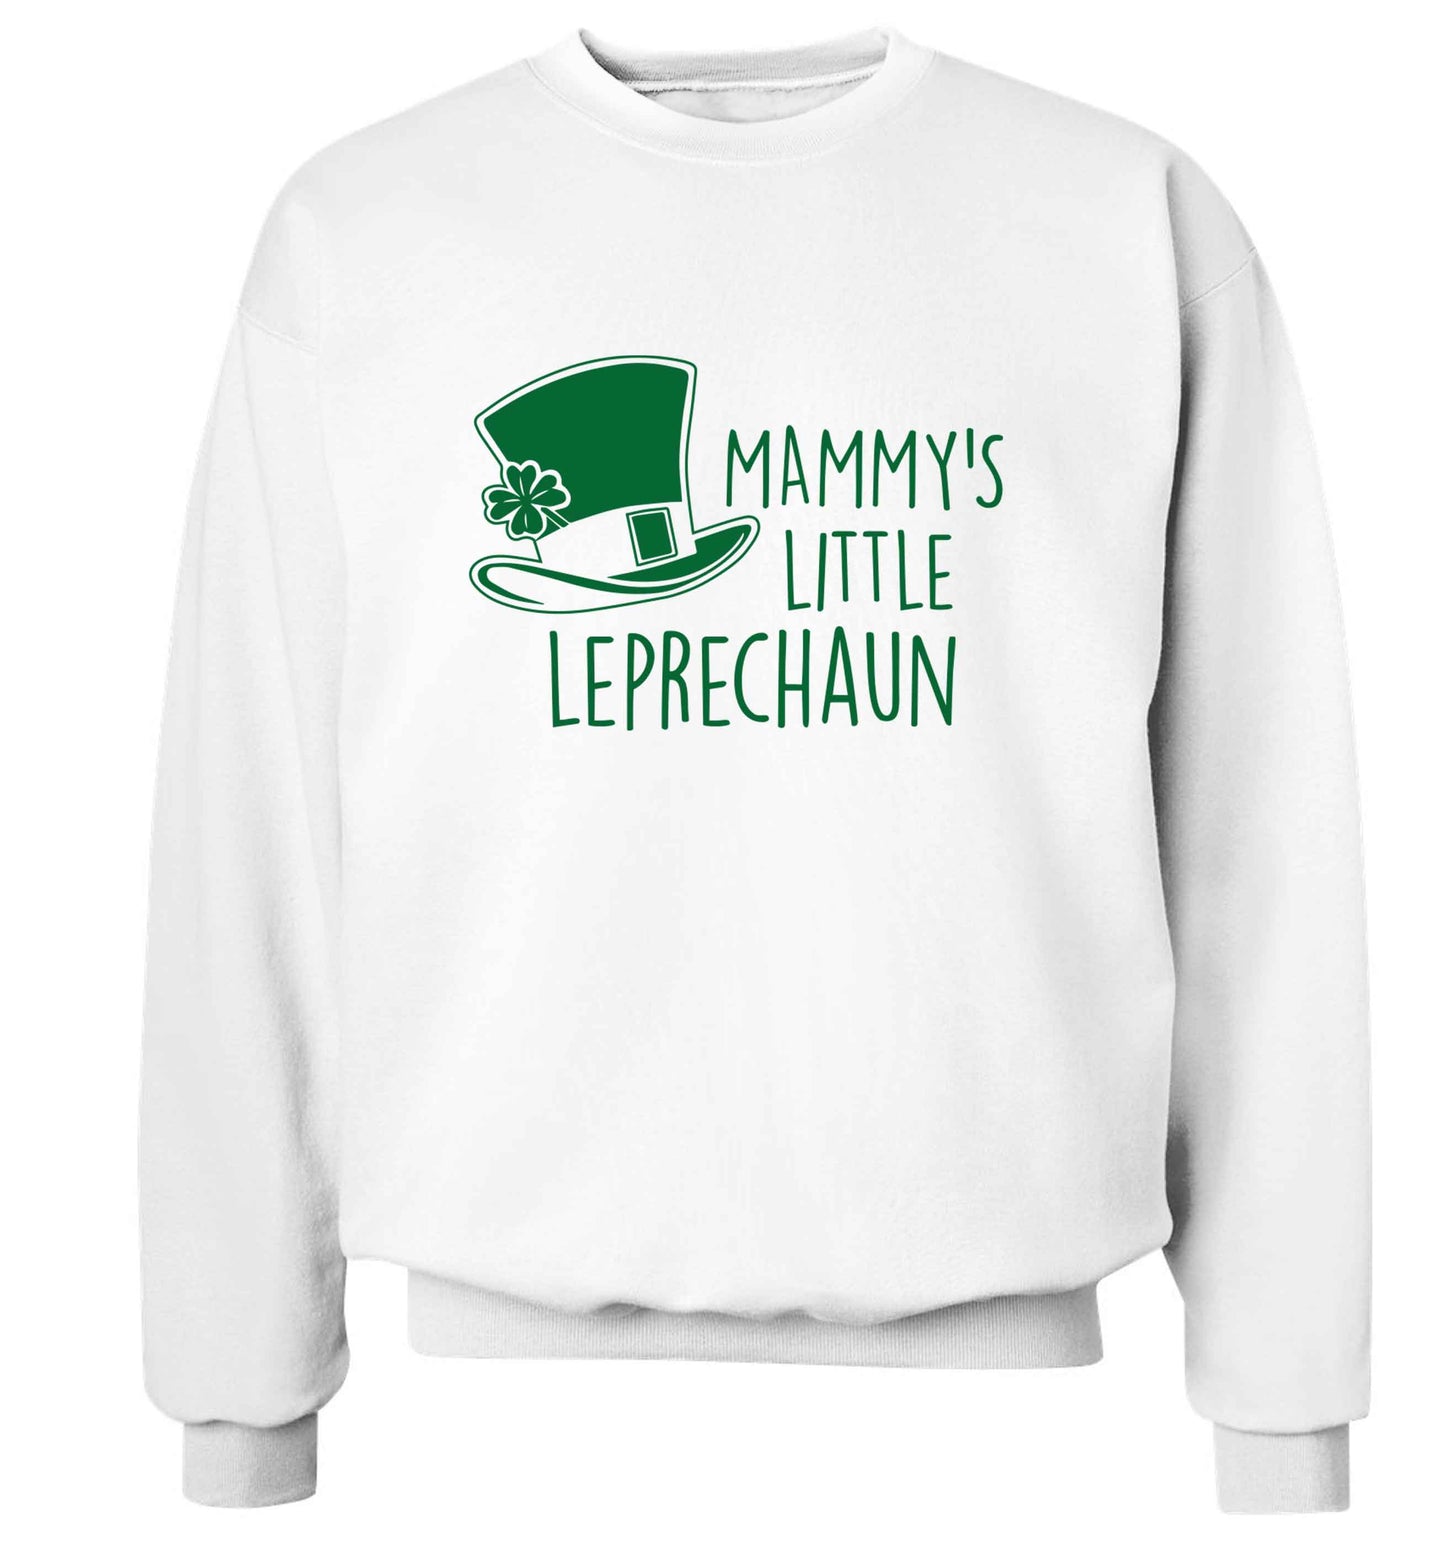 Mammy's little leprechaun adult's unisex white sweater 2XL